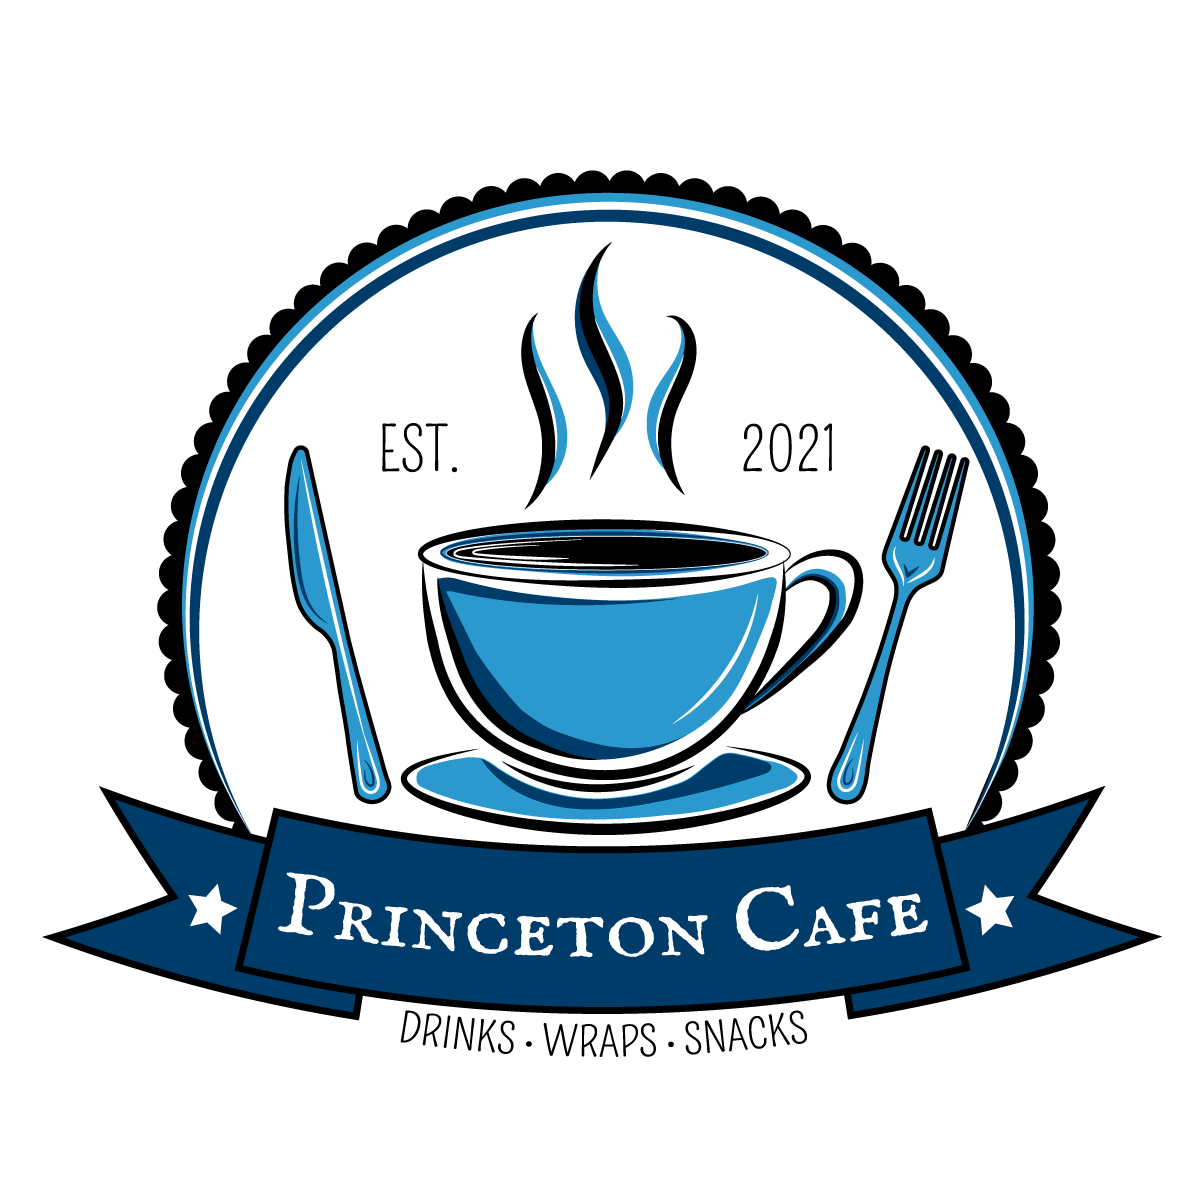 Chris' Cafe- PRINCETON FITNESS & WELLNESS